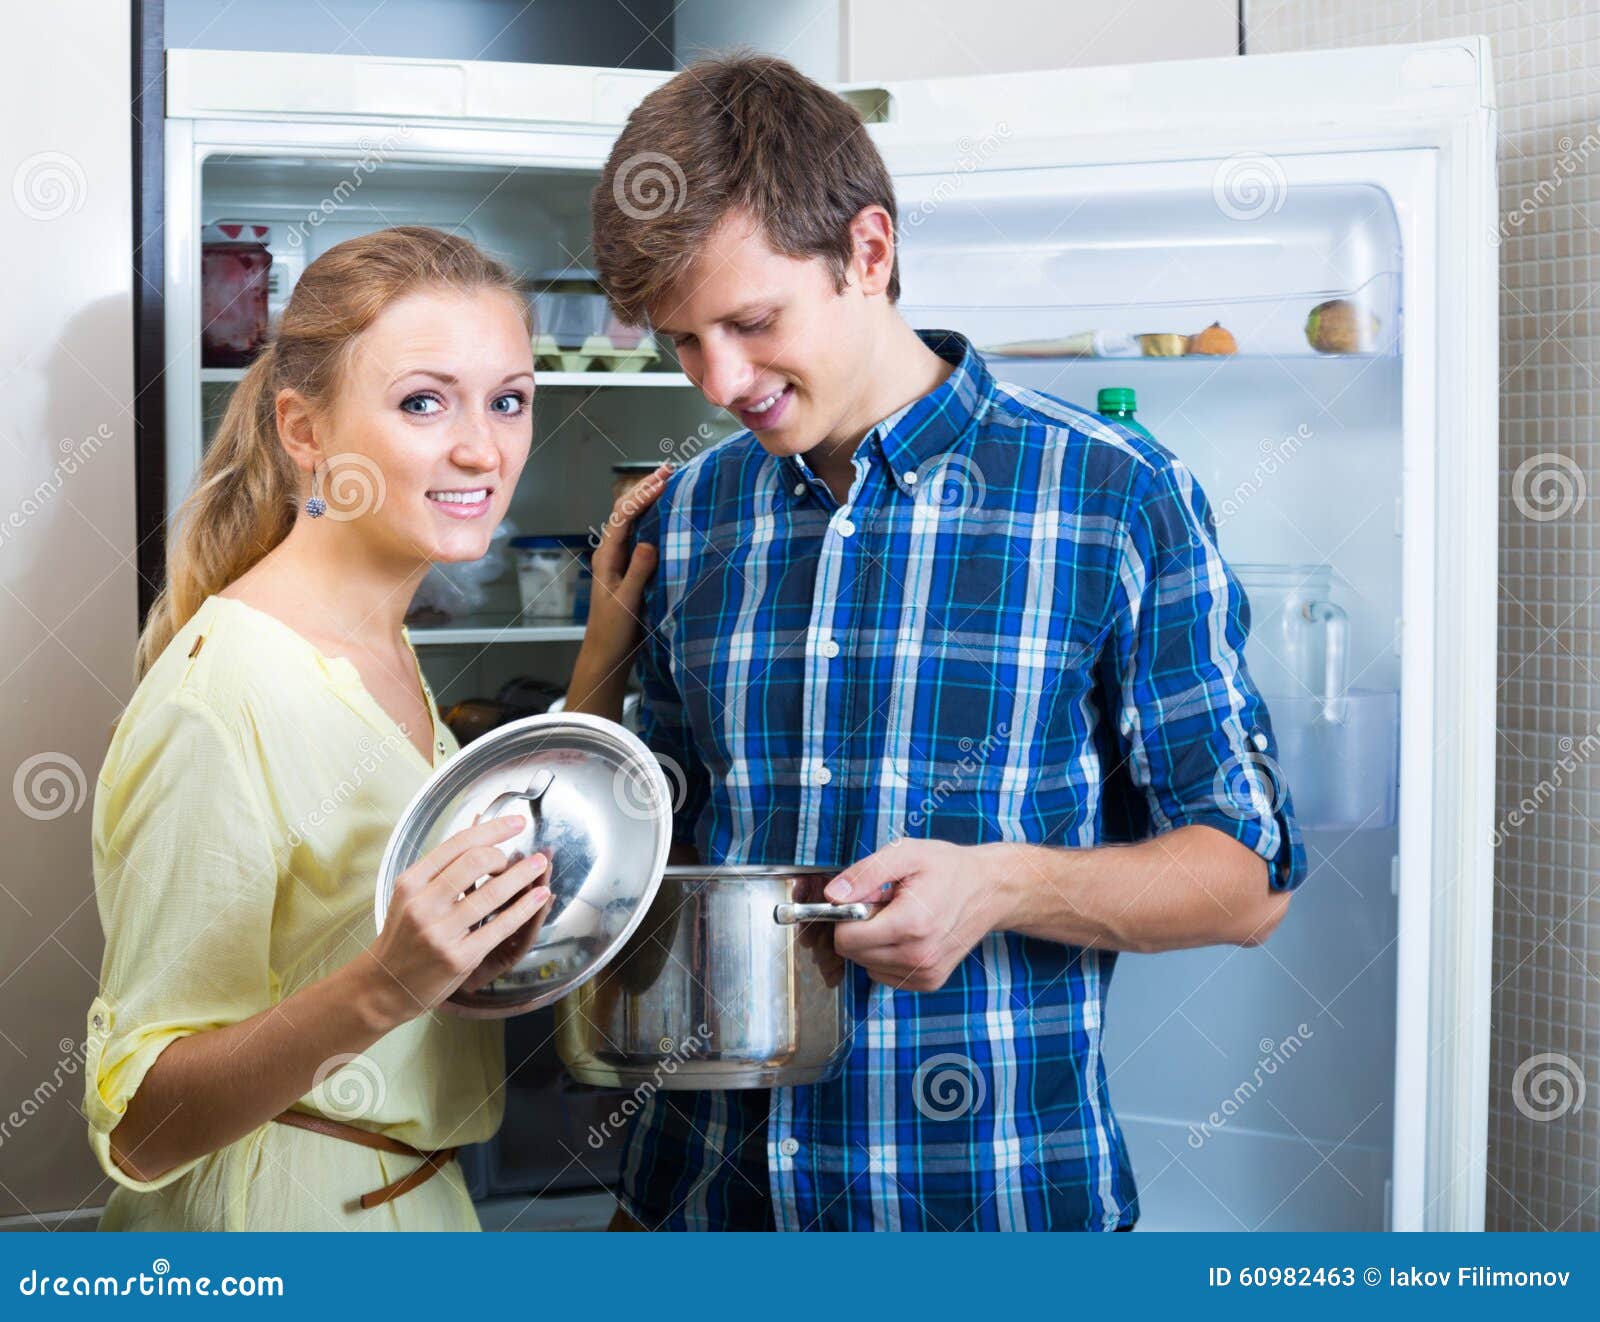 happy couple looking food near fridge